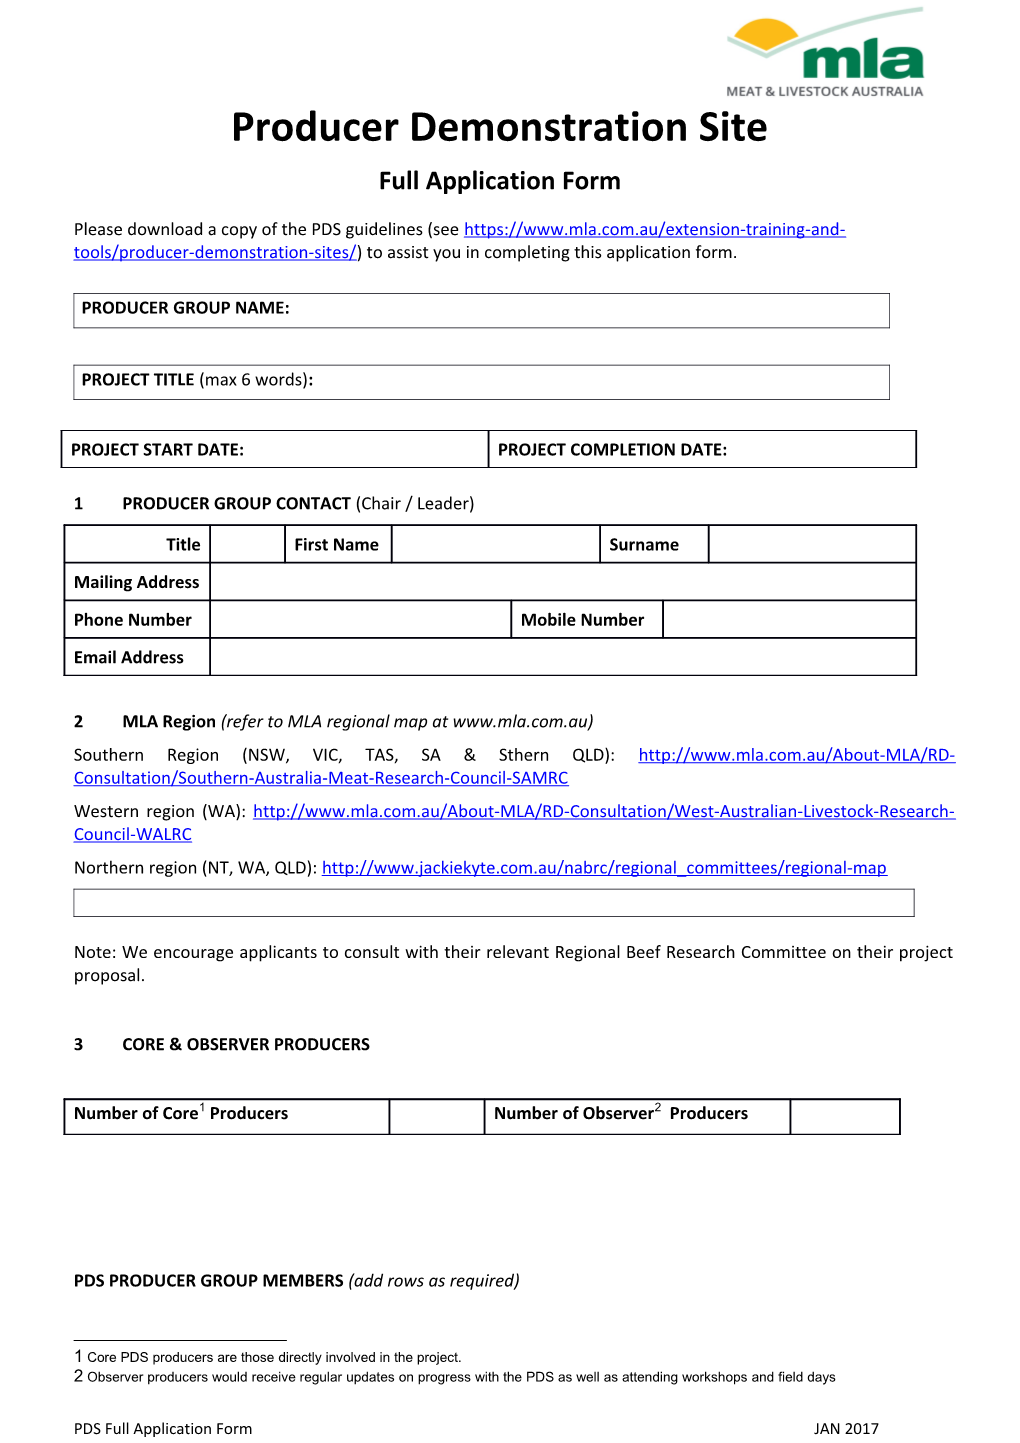 PDS Full Application Form JAN17 FINAL